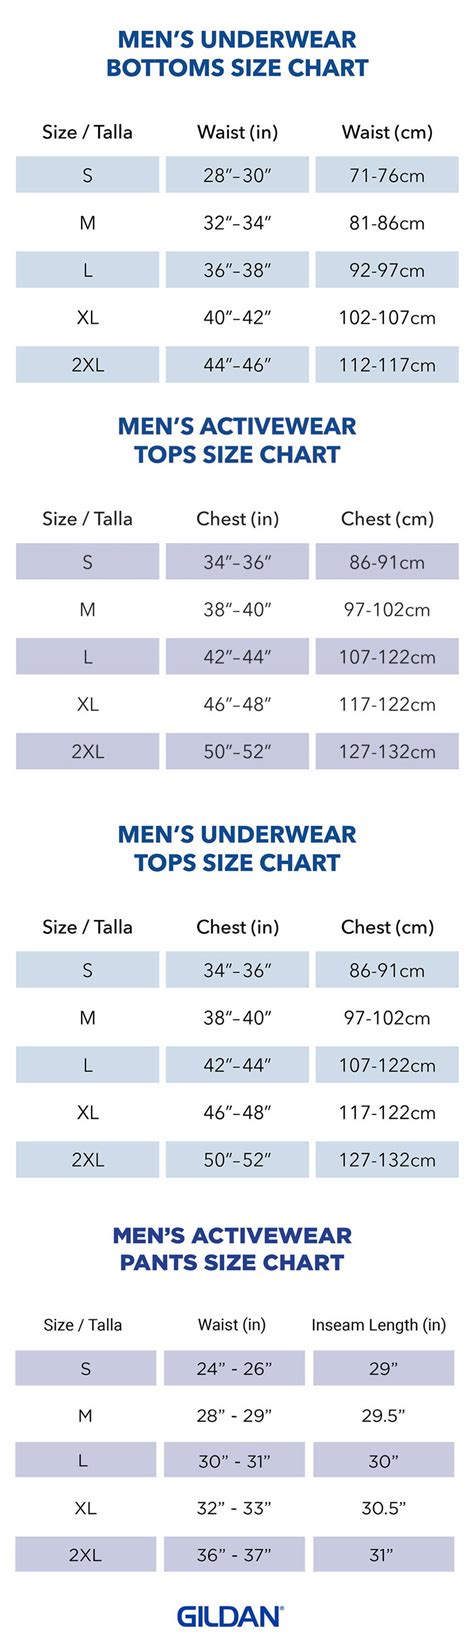 Gildan Size Chart Active Workwear Bookcityorkr